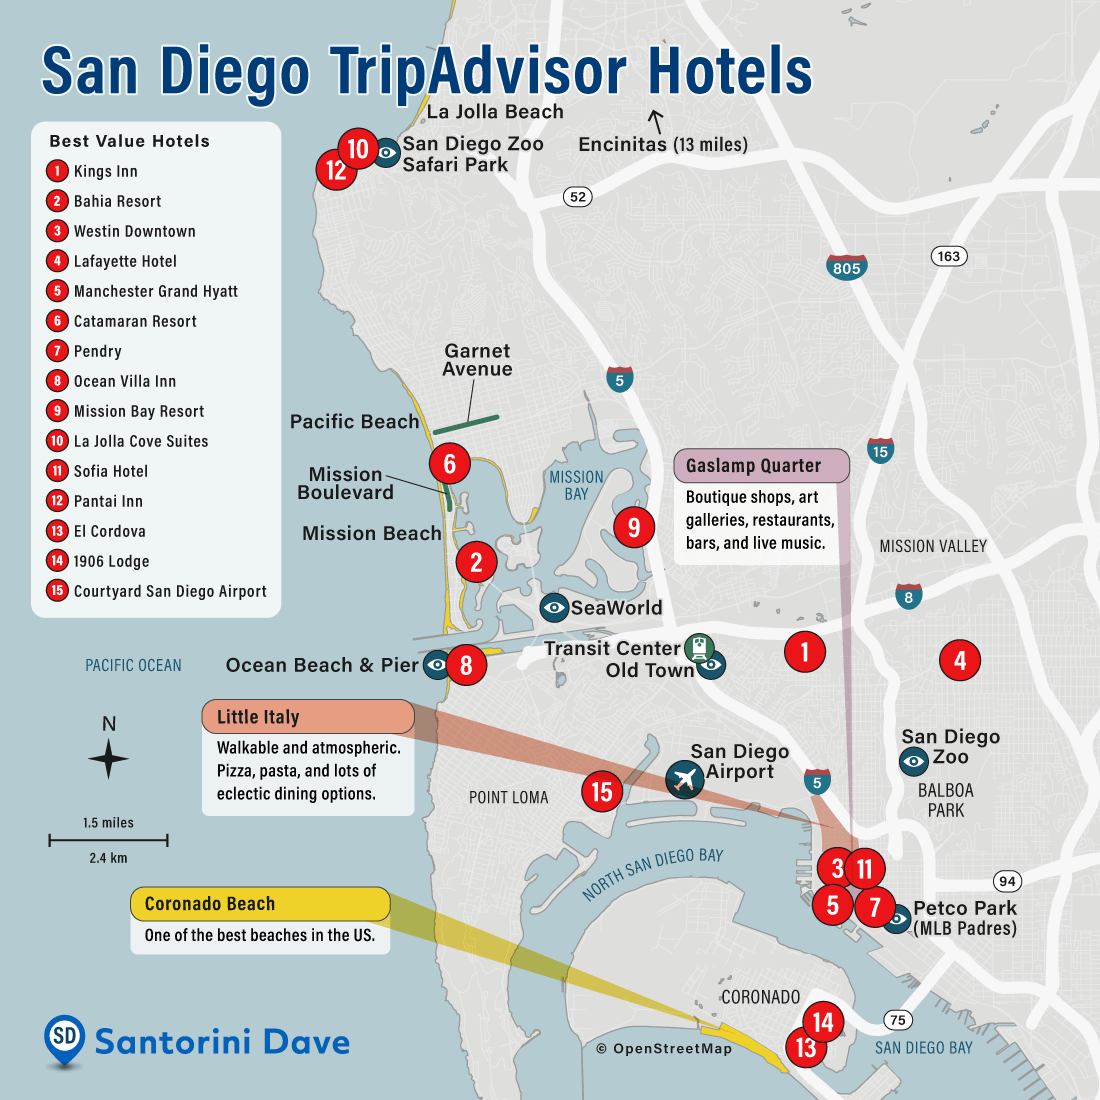 San Diego TripAdvisor Hotels